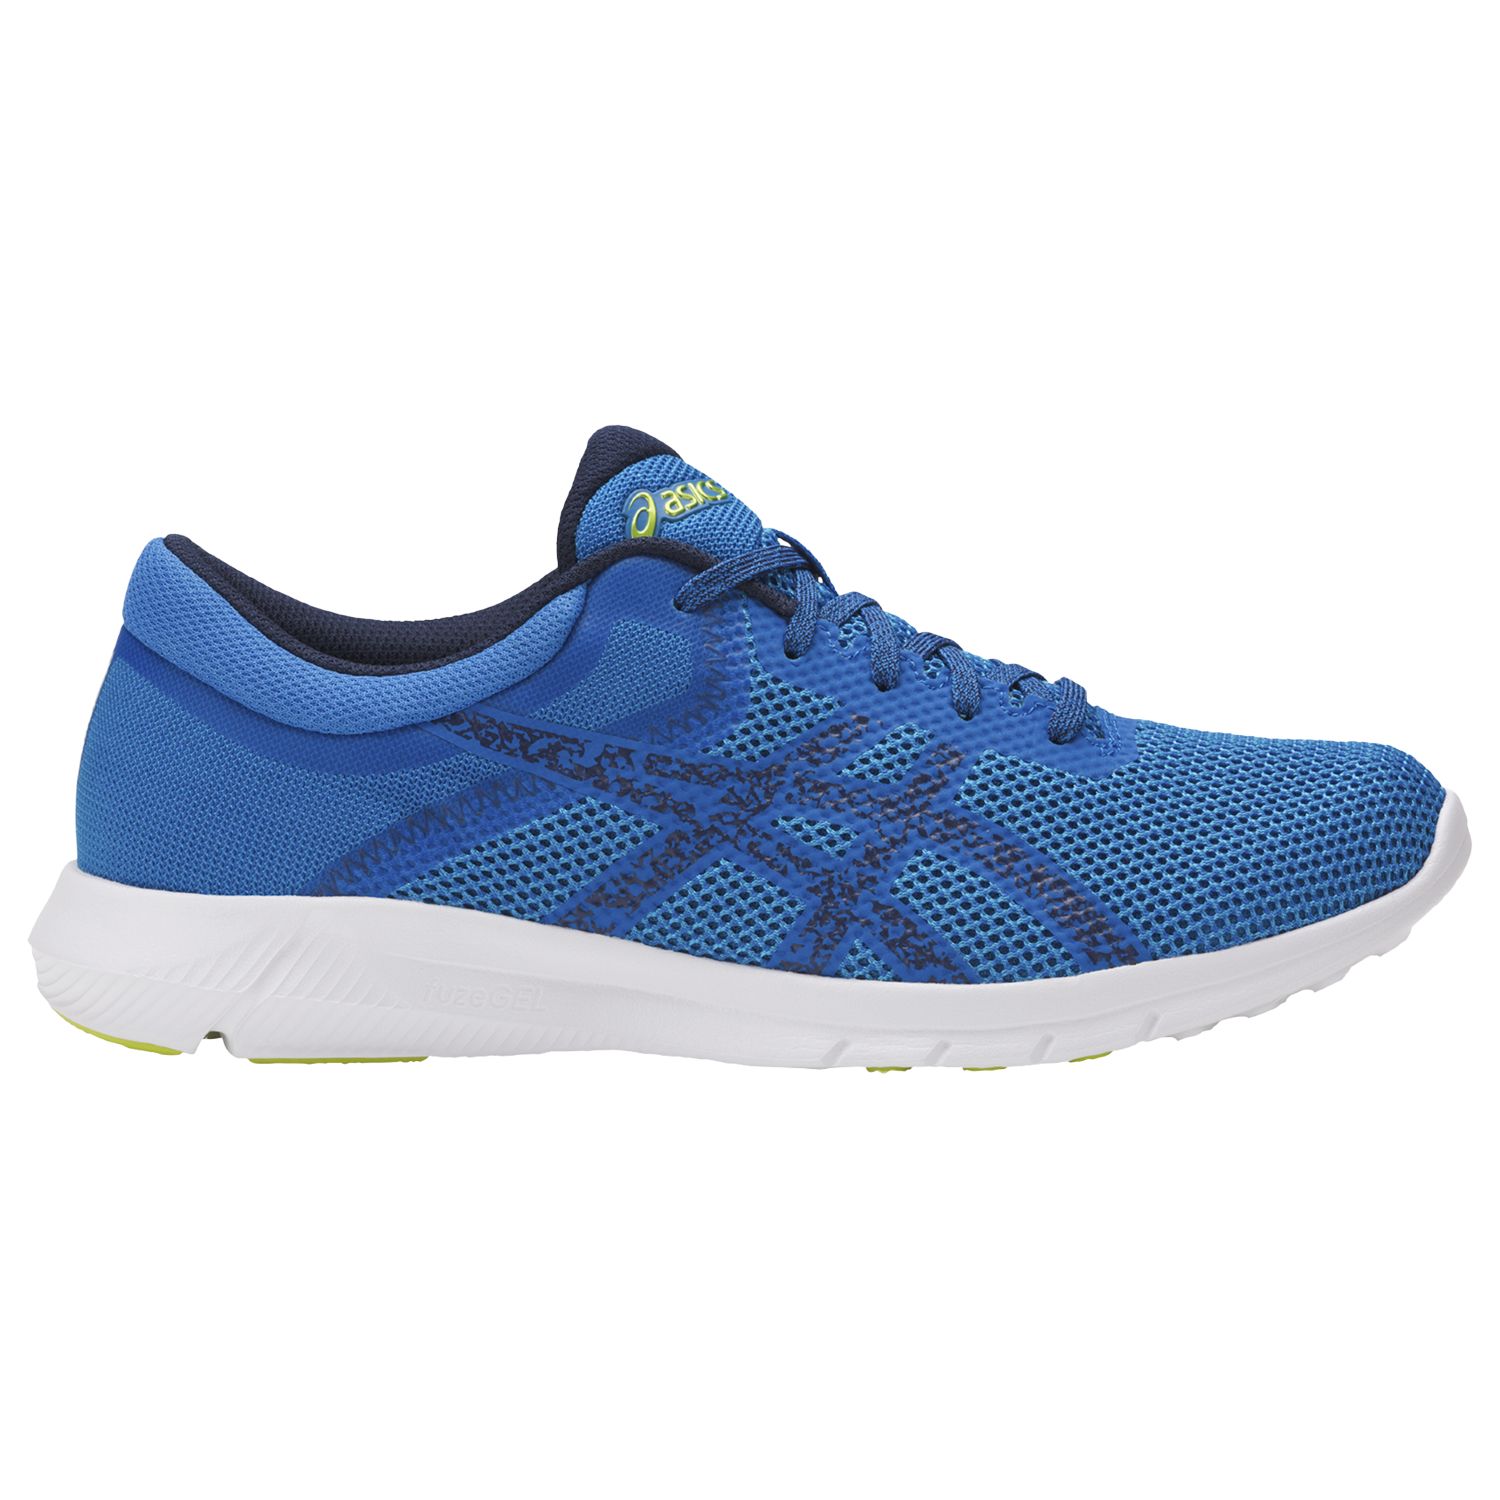 Asics NitroFuze 2 Men's Running Shoes, Blue, 8